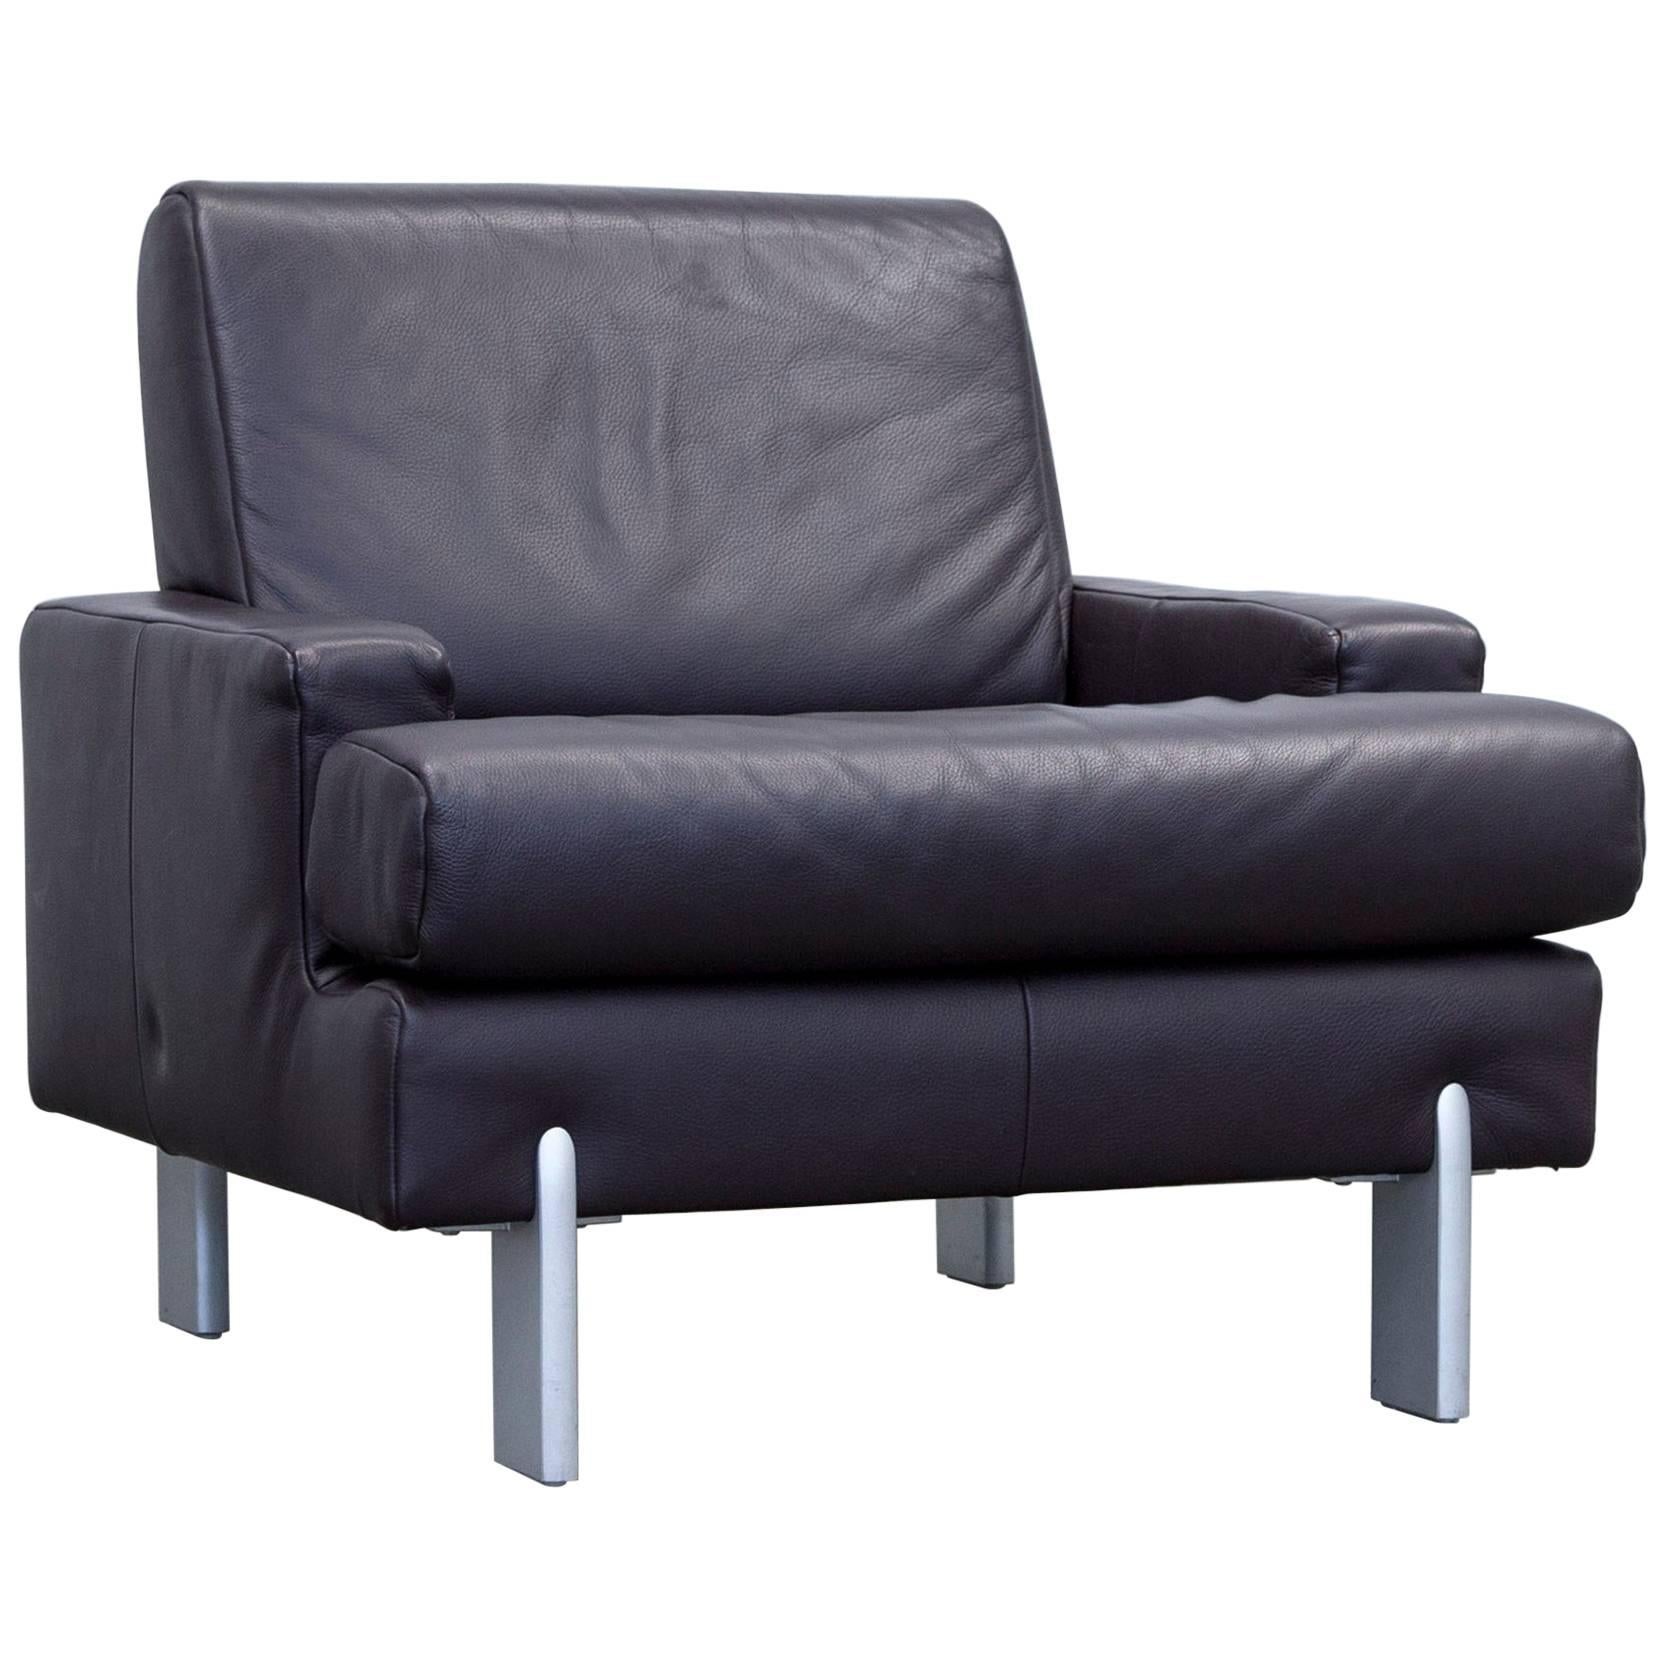 Rolf Benz Designer Armchair Leather Aubergine Violet One-Seat Couch Modern